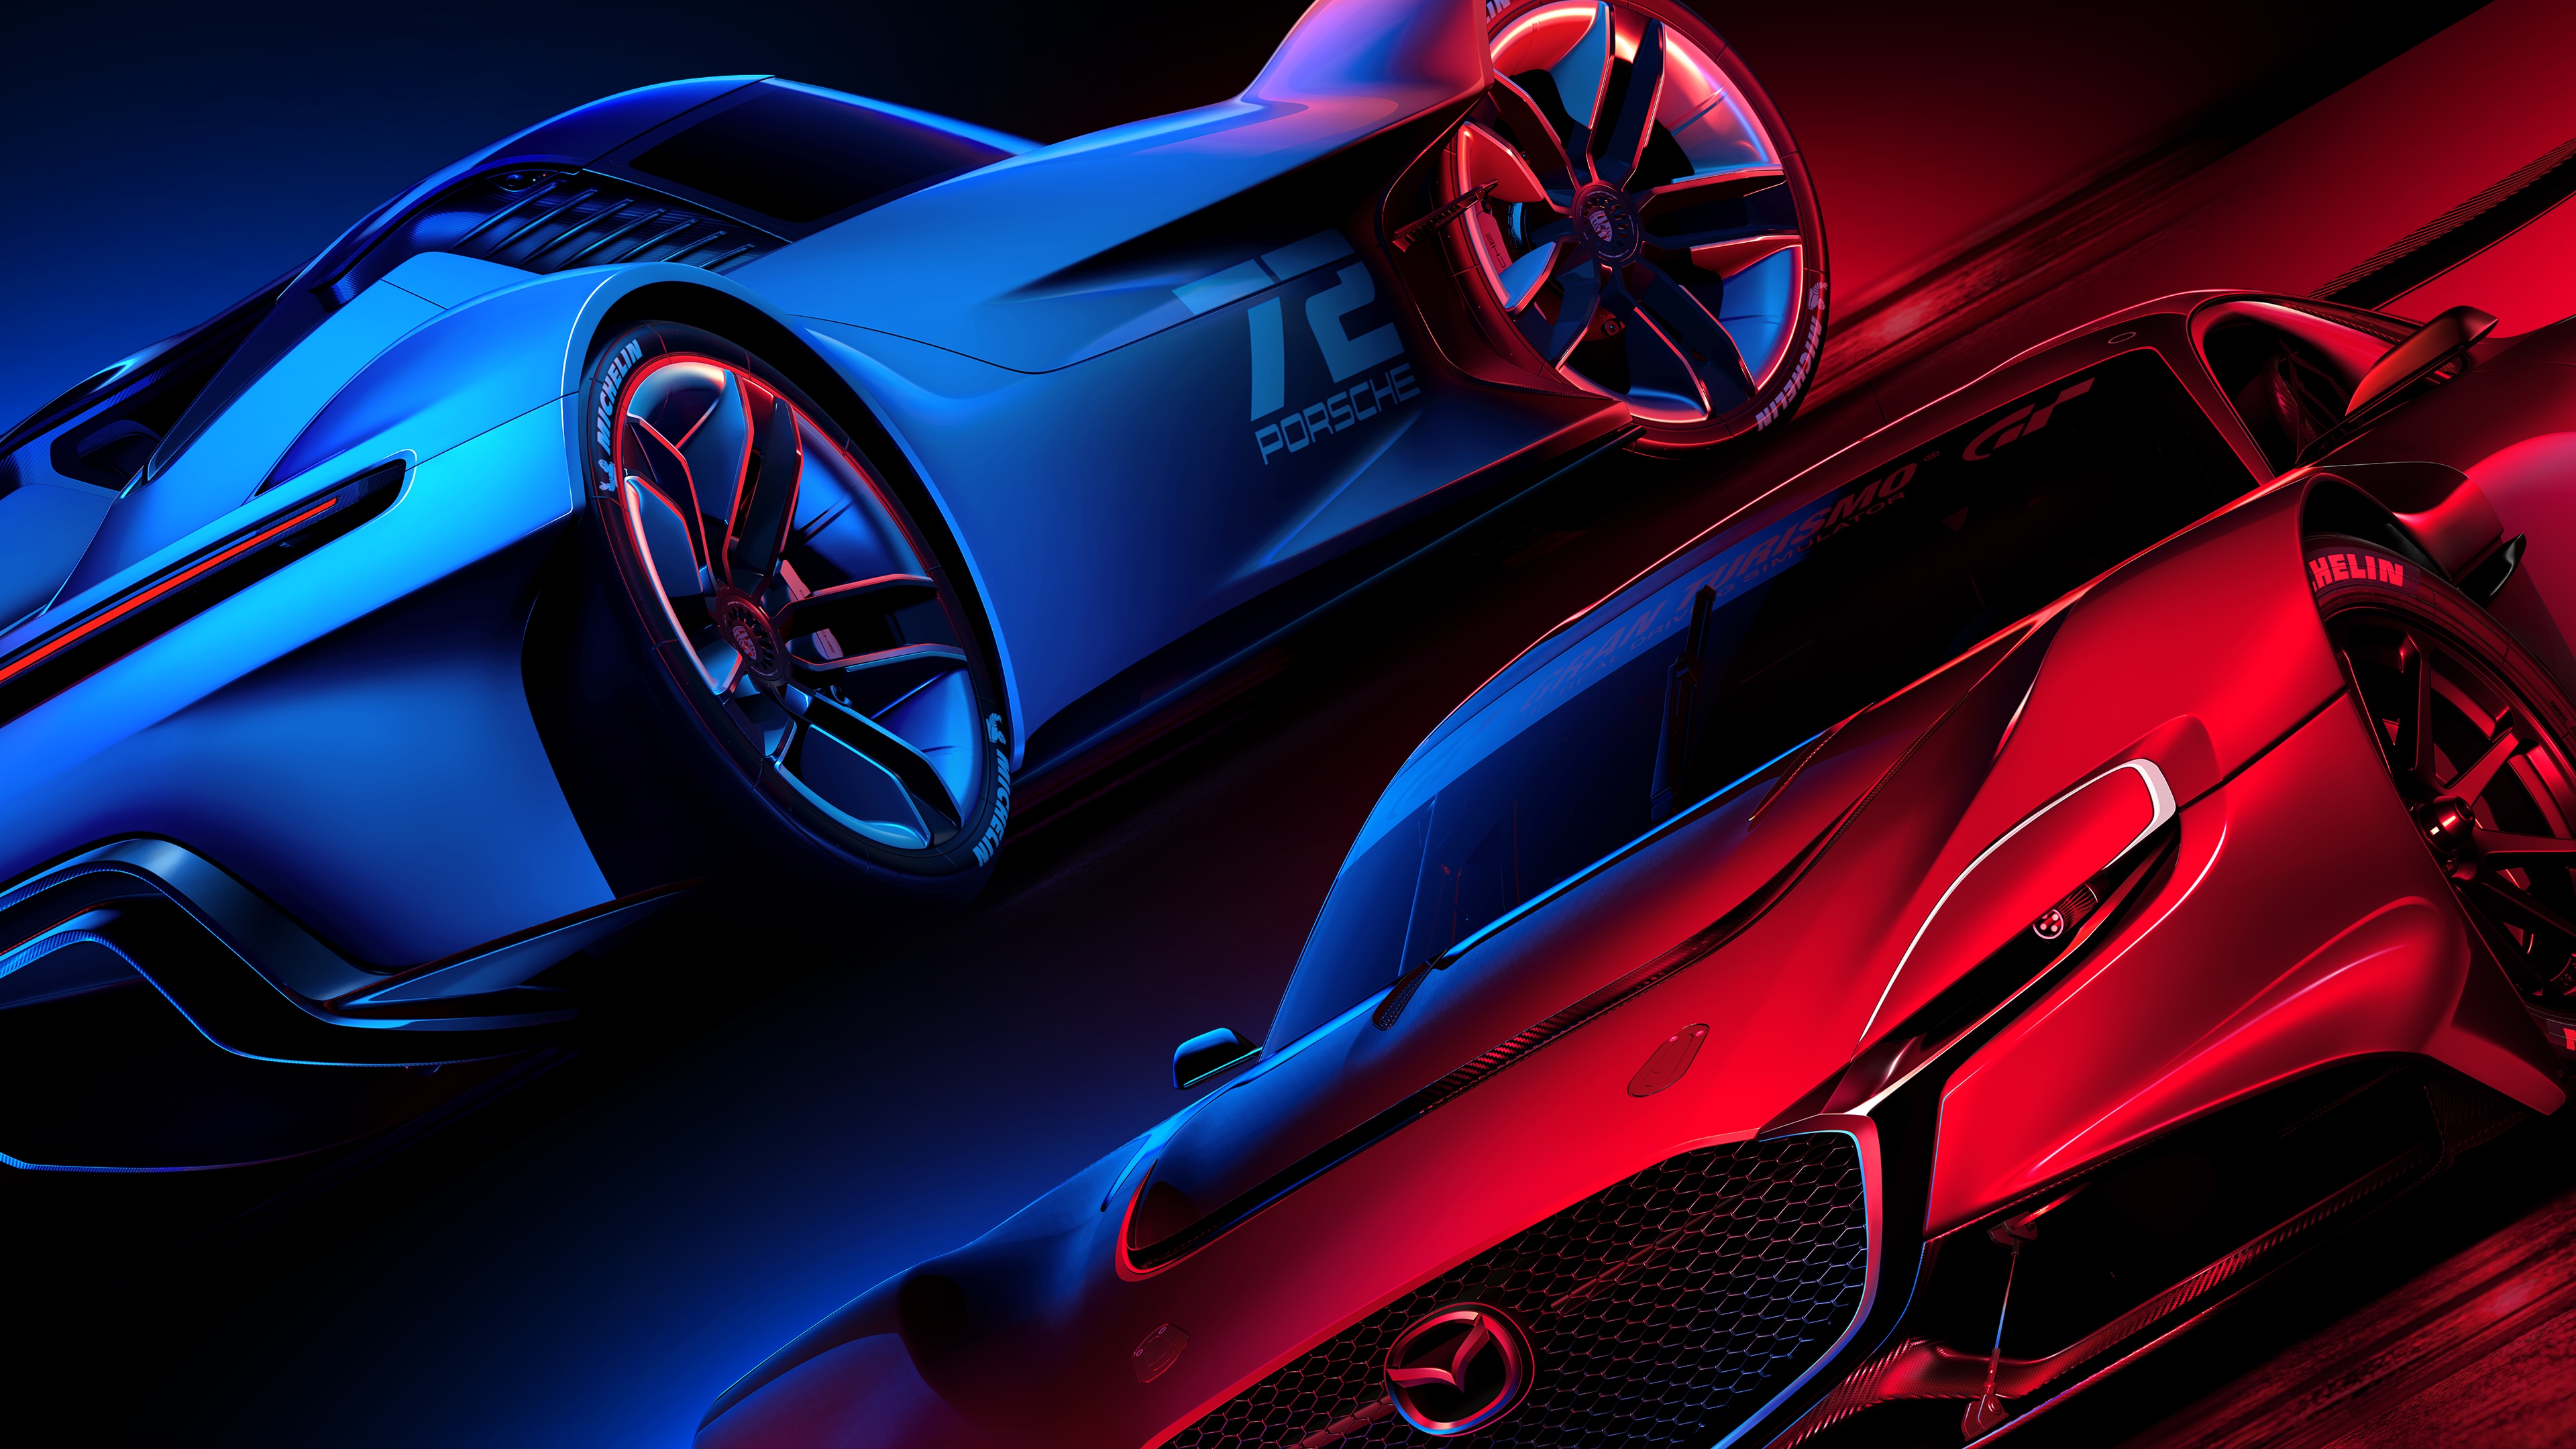 Video Game Gran Turismo 7 HD Wallpaper | Background Image